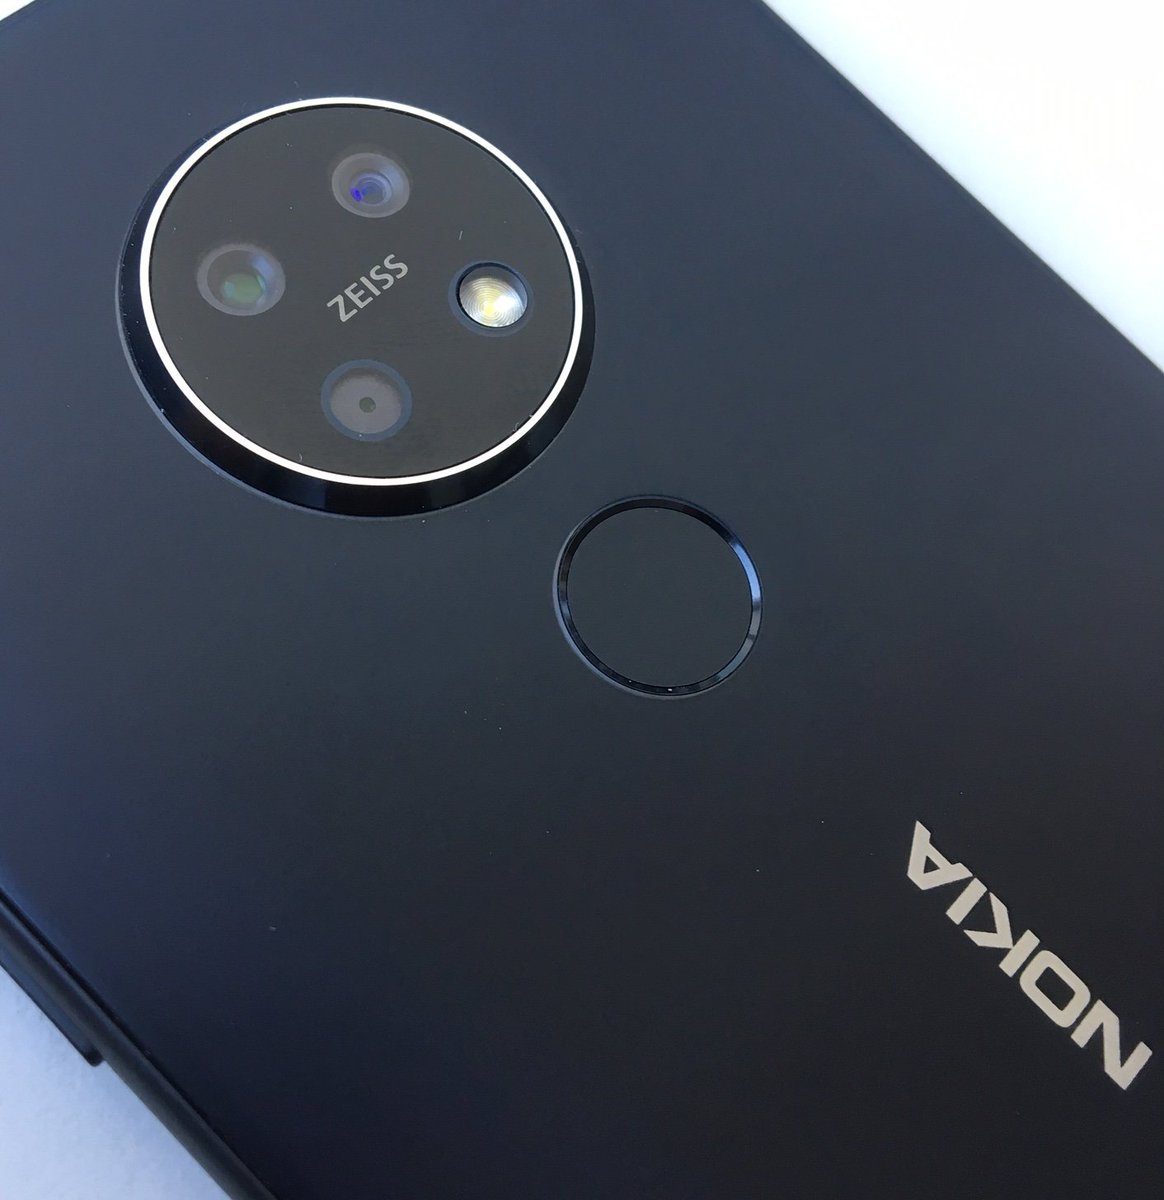 Nokia 7.2 baru menunjukkan kepada kami tiga kamera dalam beberapa gambar yang bocor